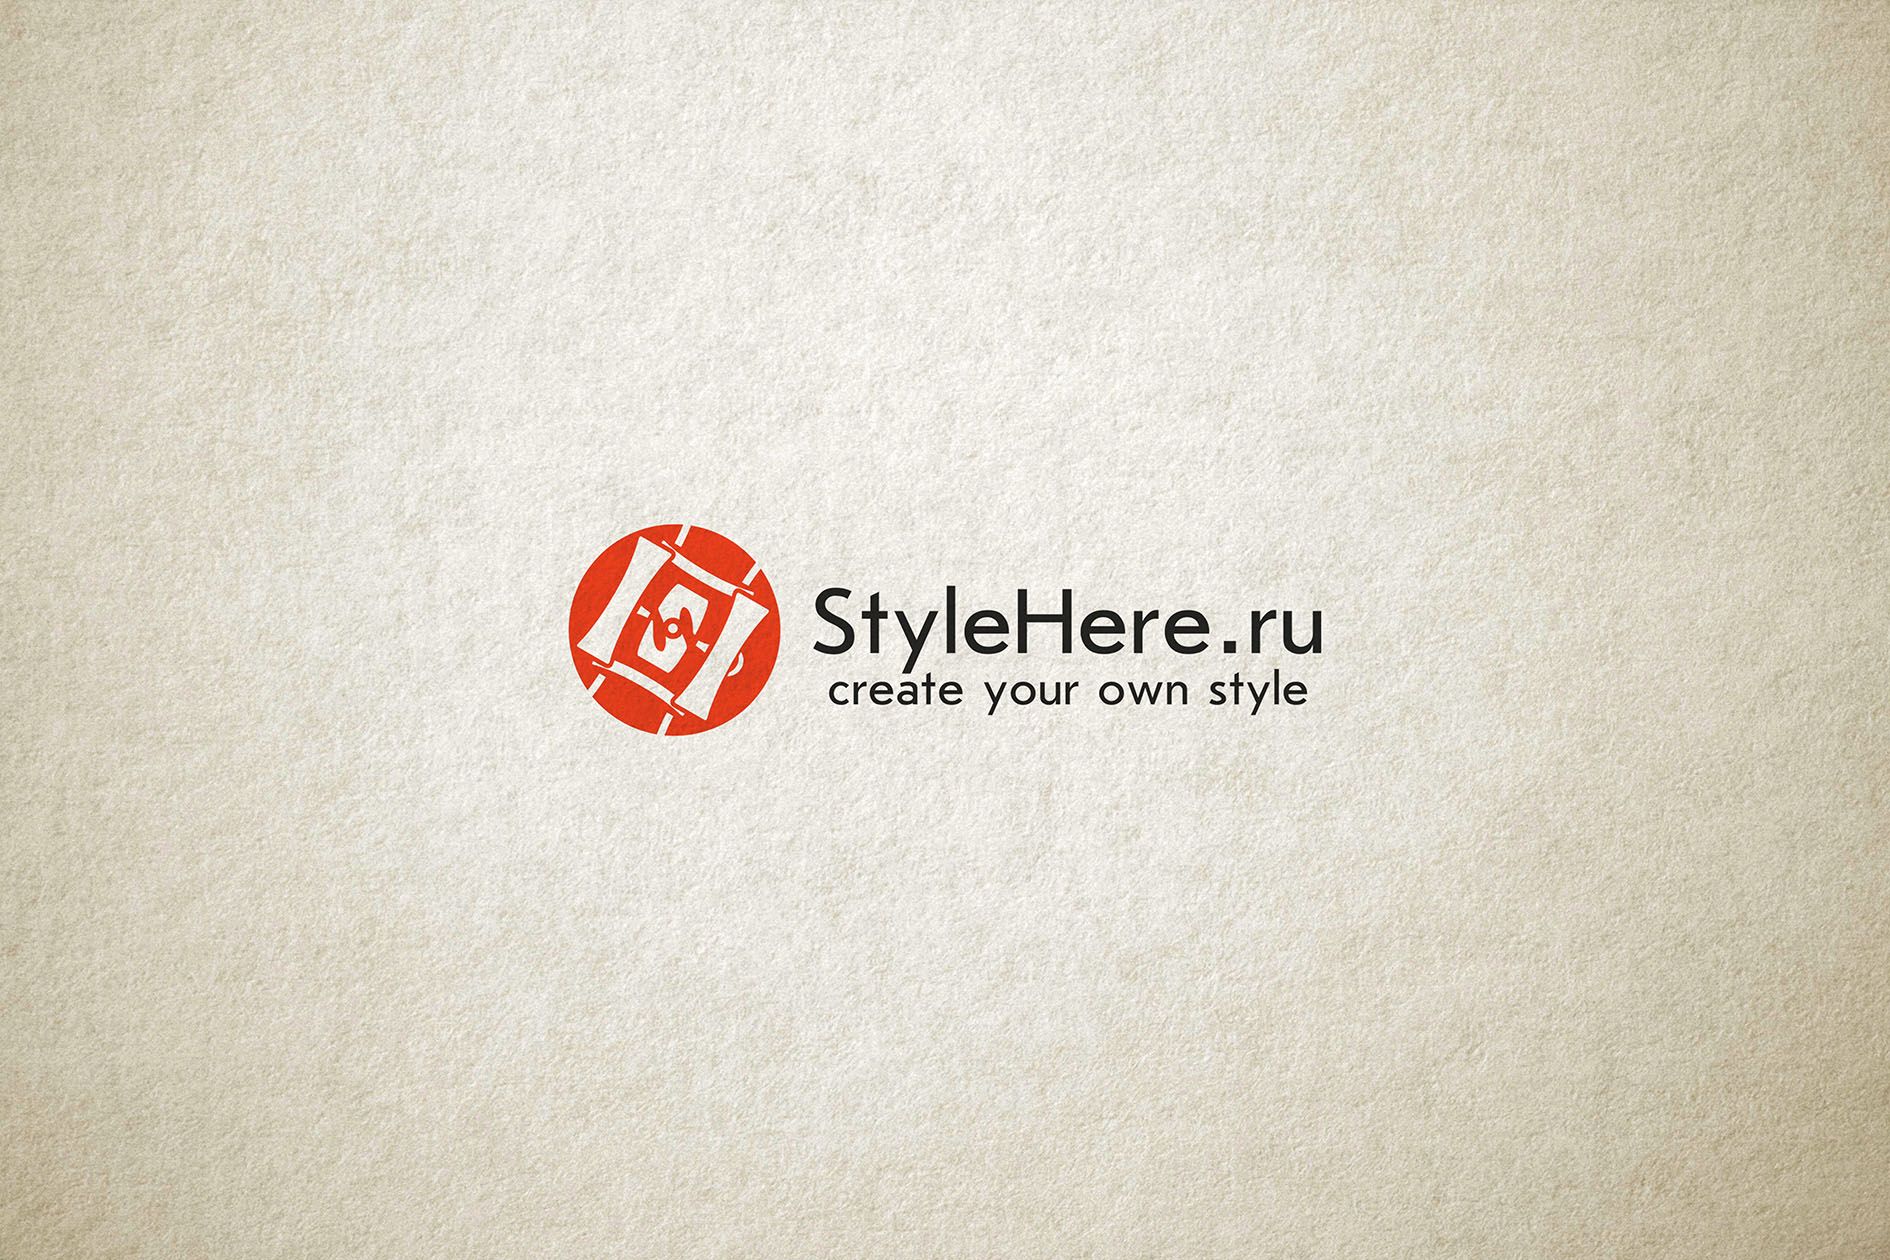 Логотип для интернет-магазина stylehere.ru - дизайнер cloudlixo